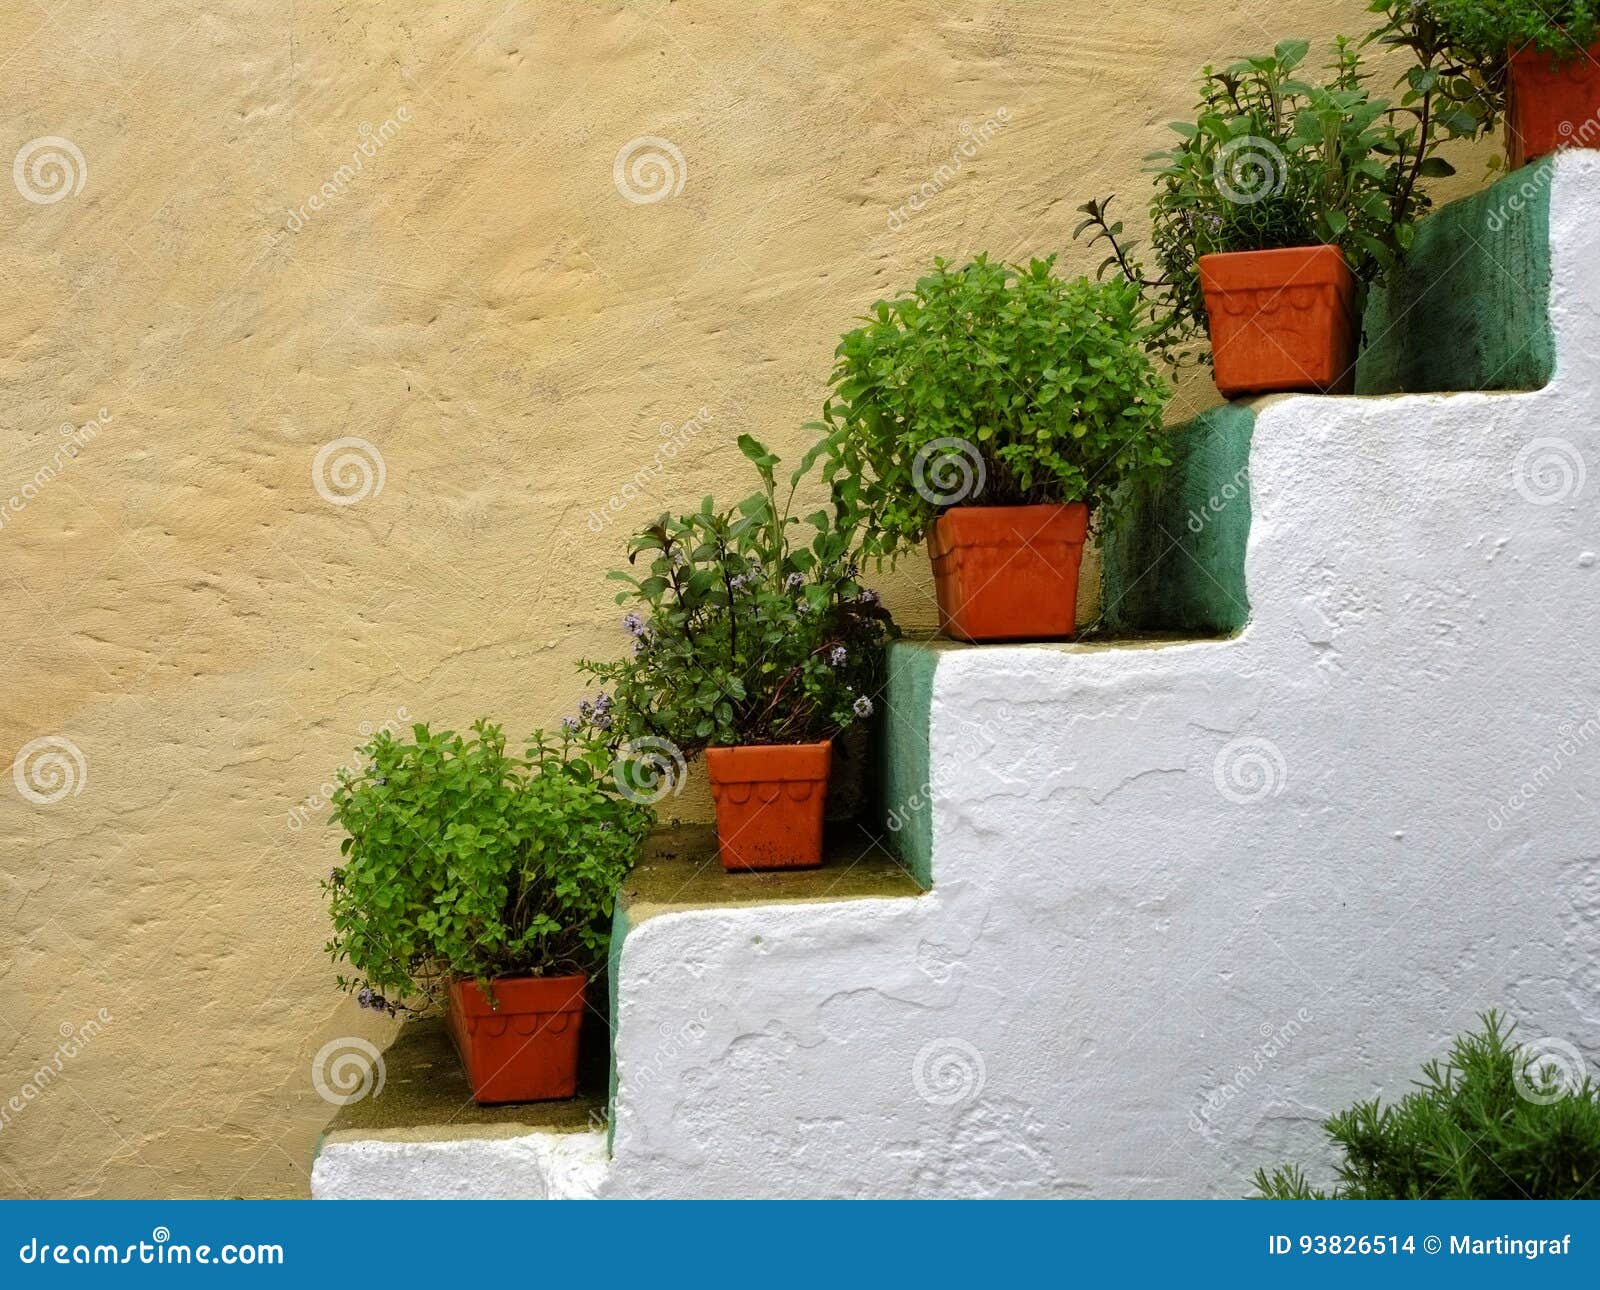 herb flowerpots on stairs alongside house wall mediterranean style